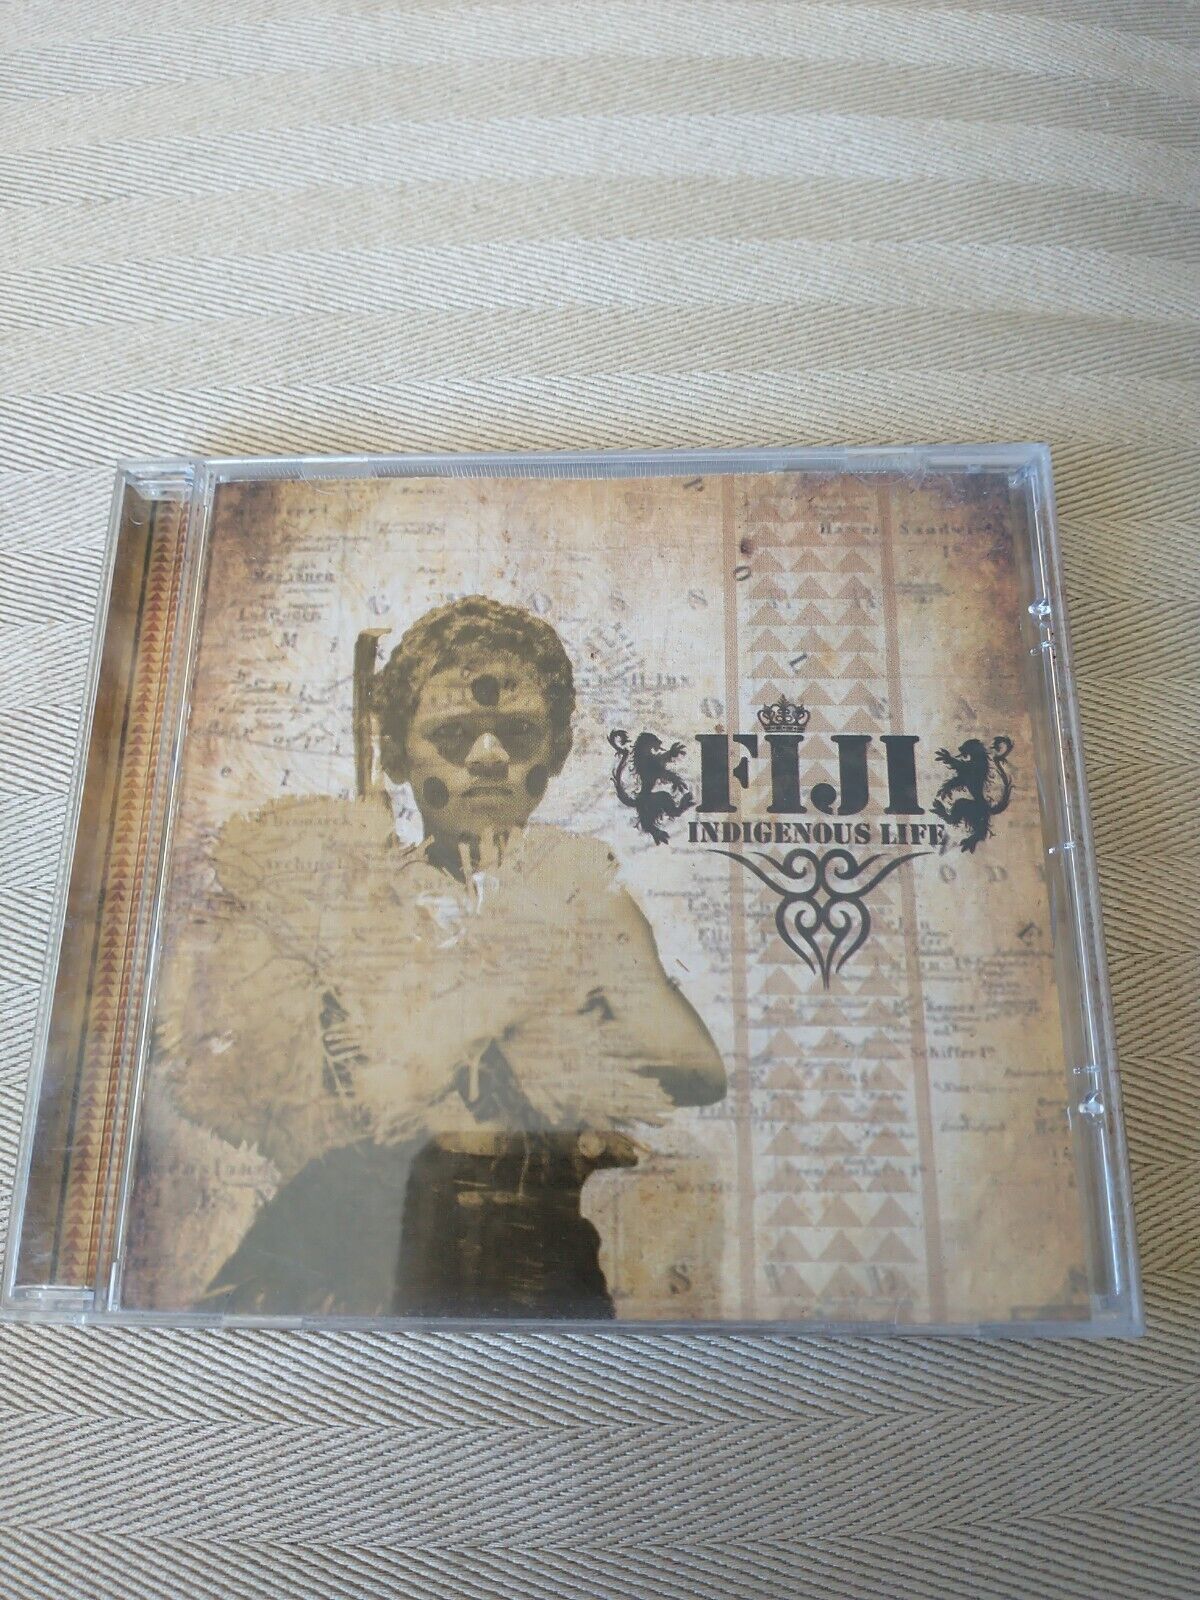 FIJI - Indigenous Life - CD - Very clean